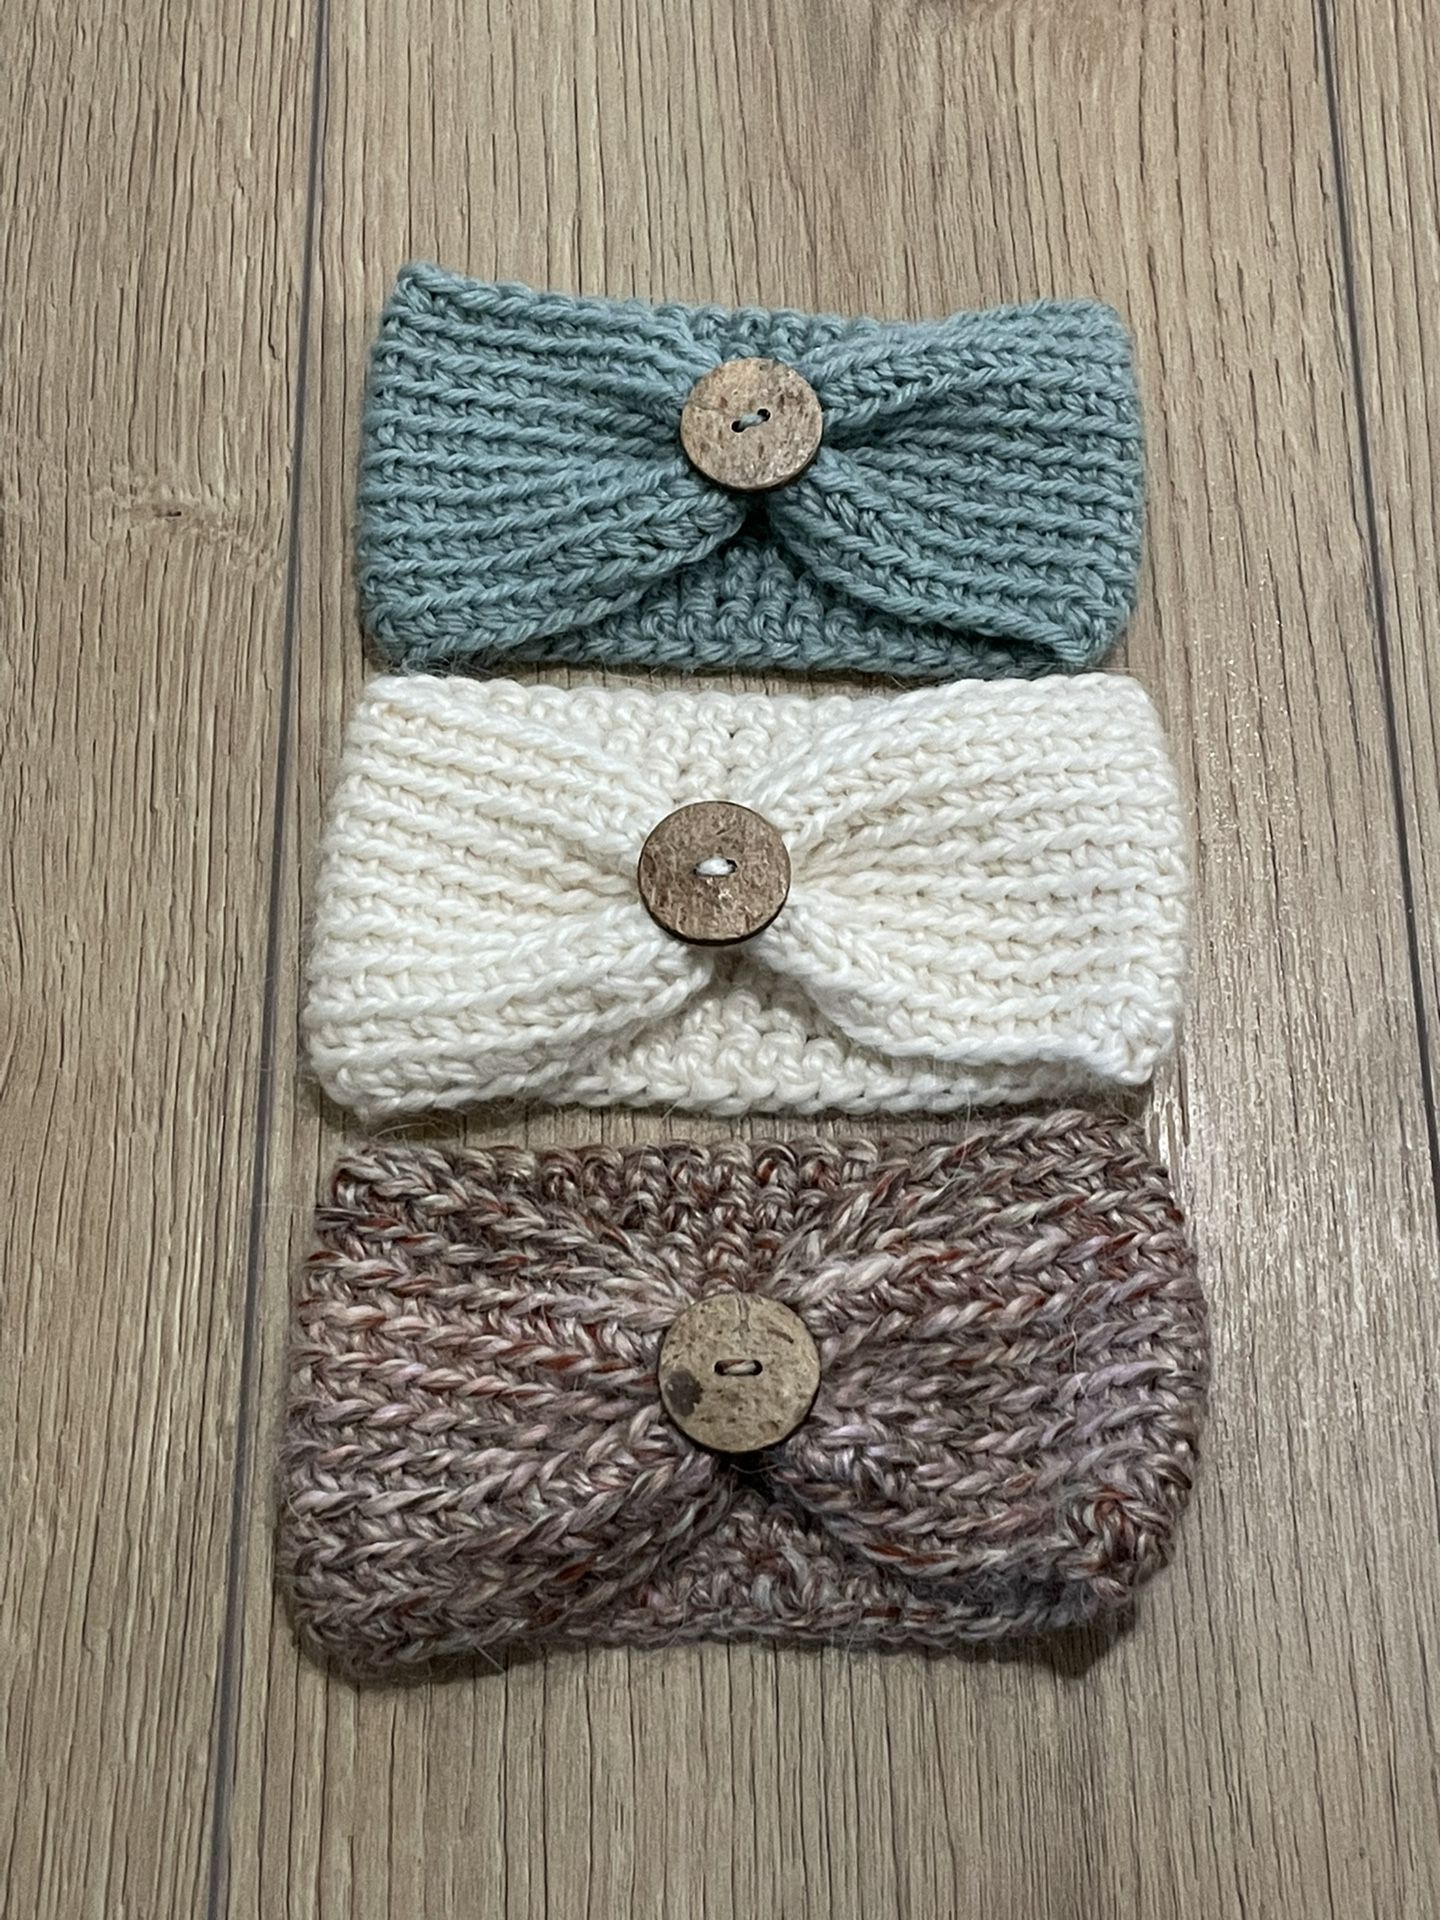 3 Crochet Newborn Headbands